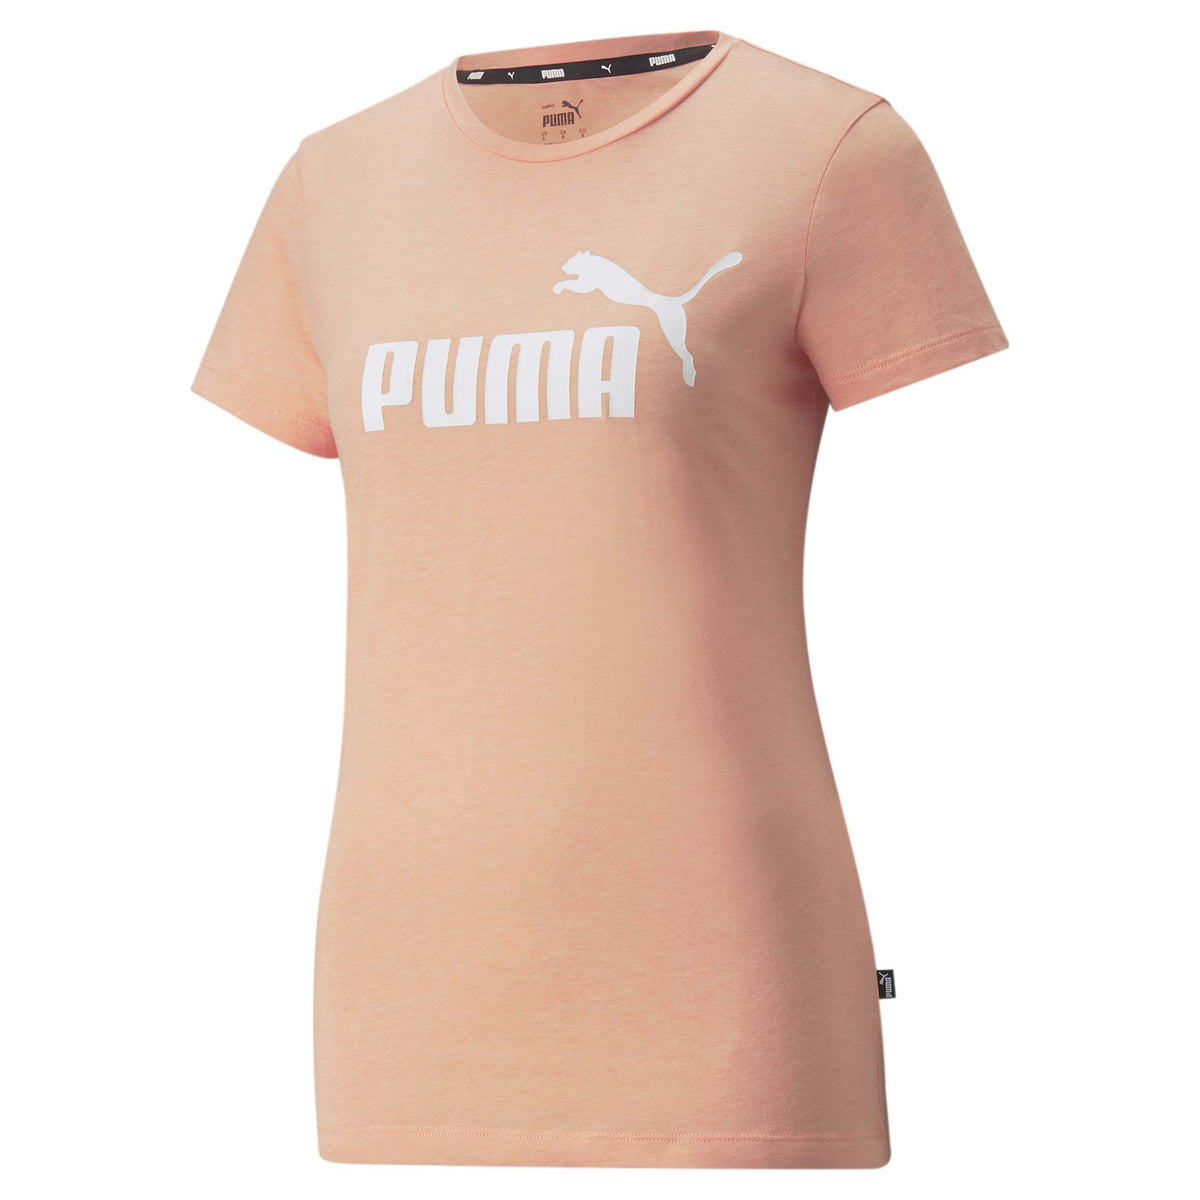 Puma Essential short sleeve t-shirt for women